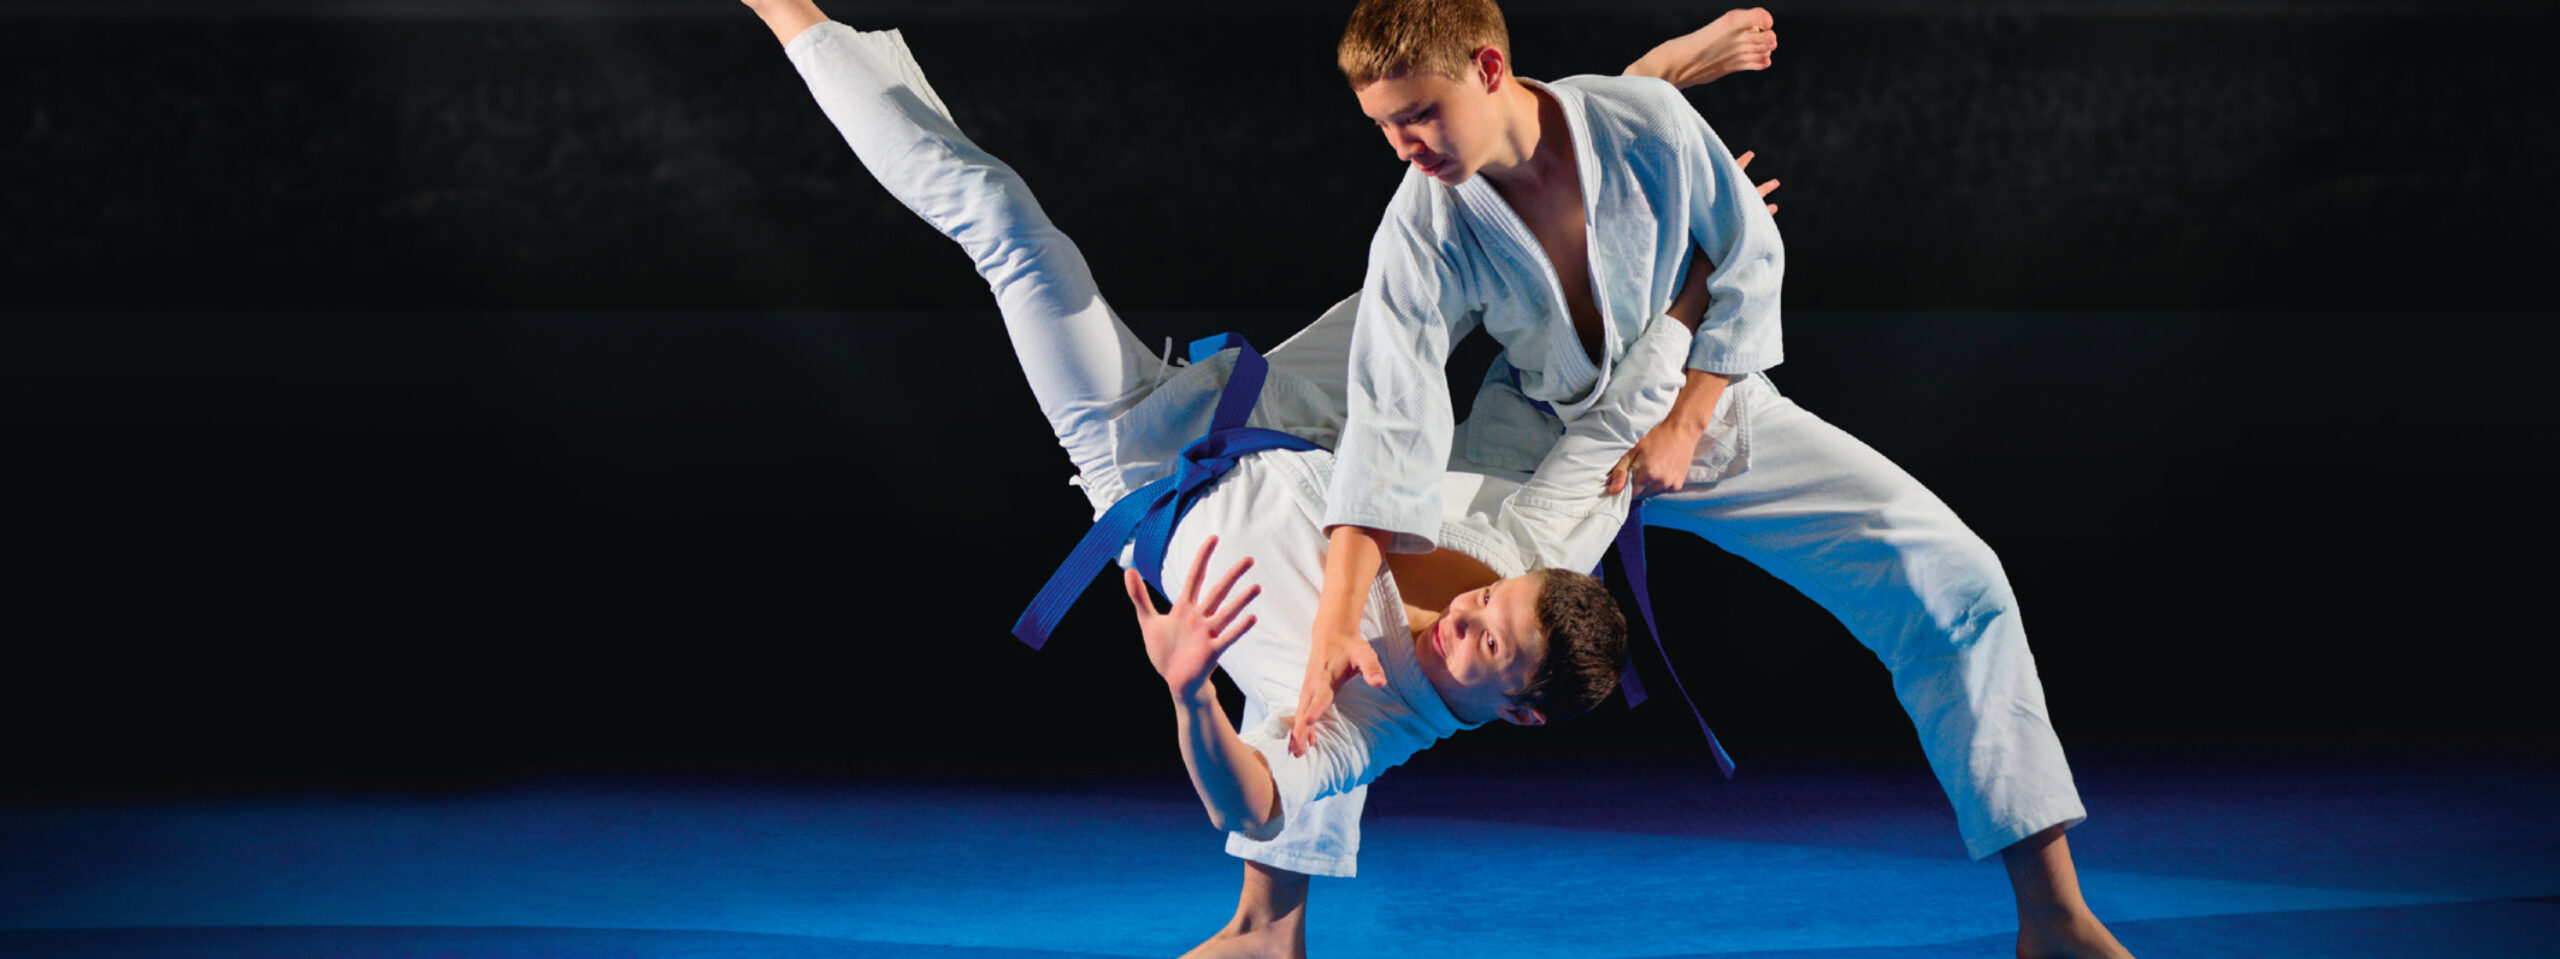 Judo và Jujitsu